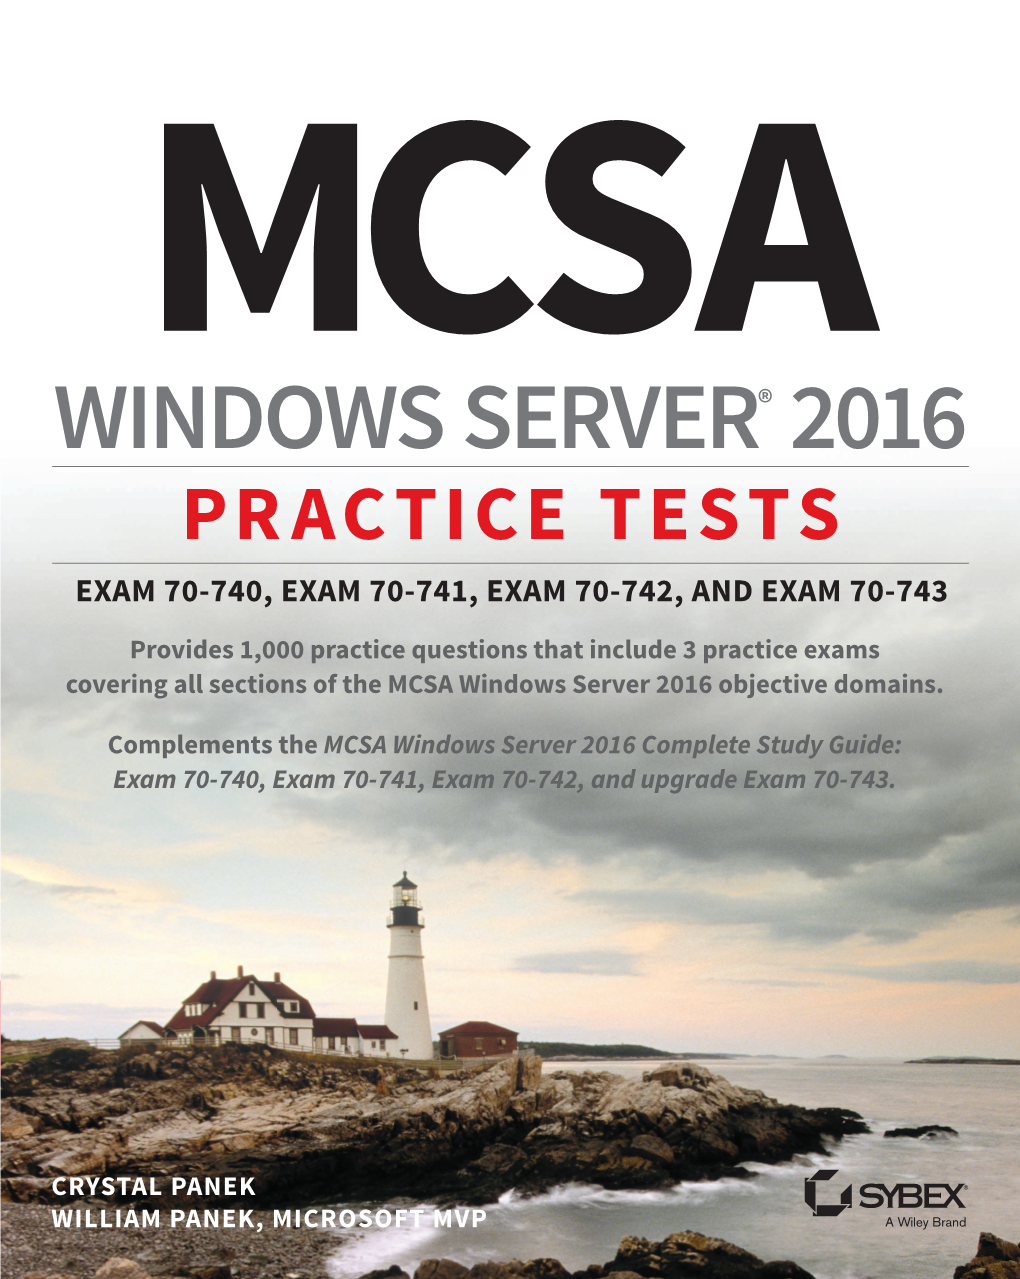 MCSA Windows Server 2016 Practice Tests